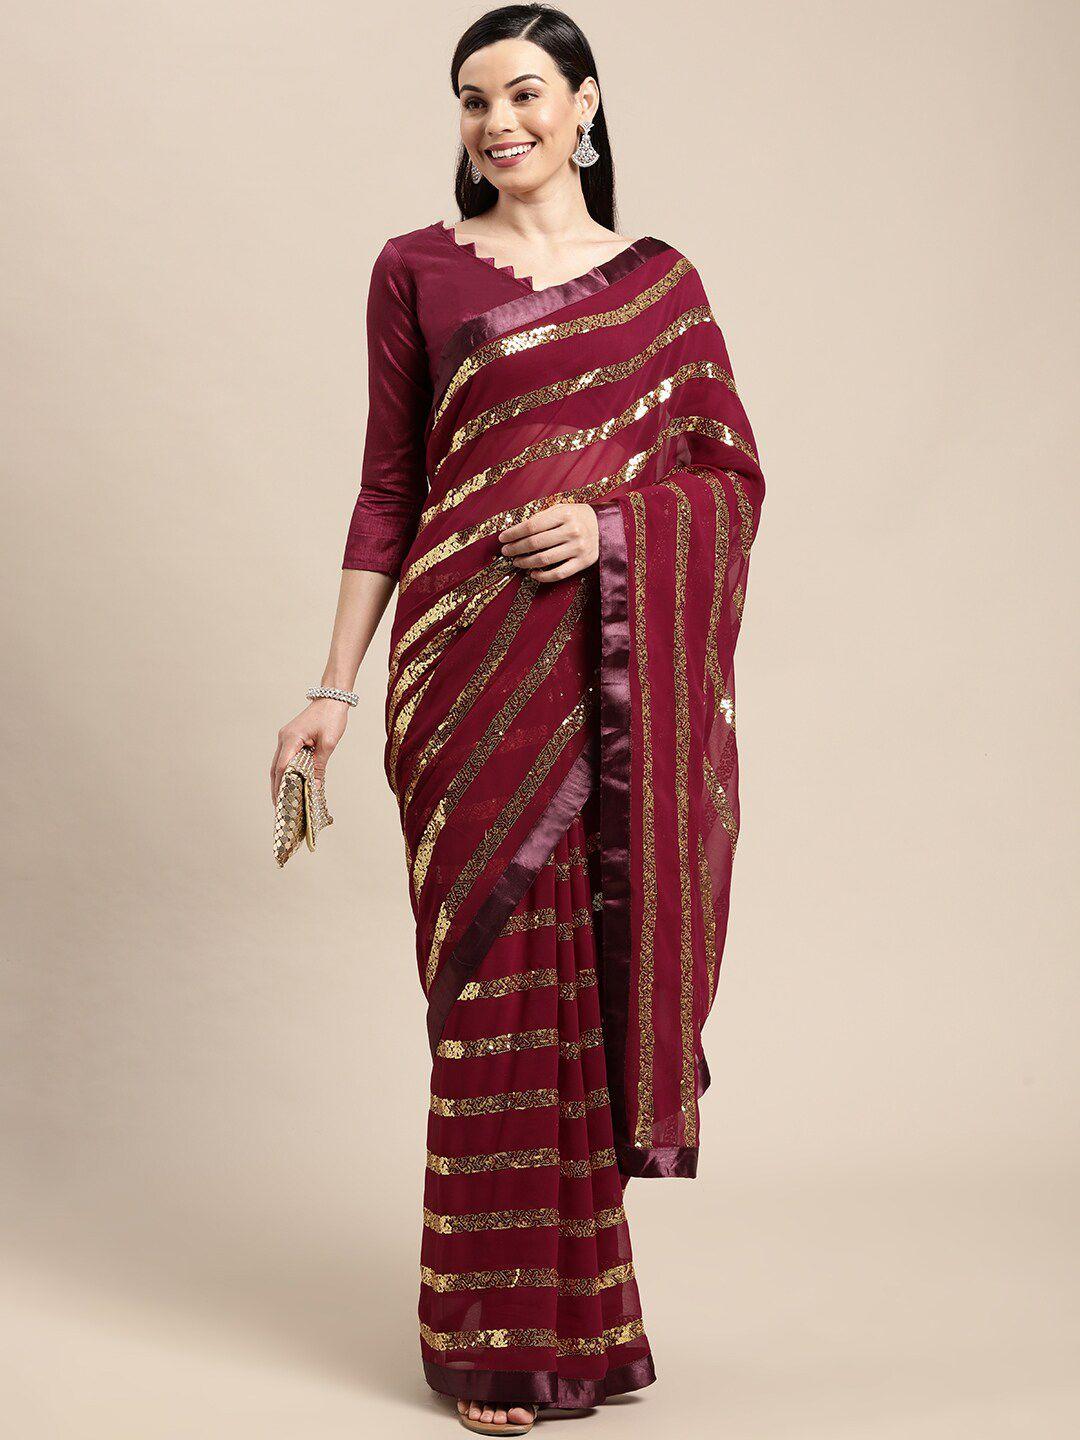 vairagee sequinned embellished leheriya saree